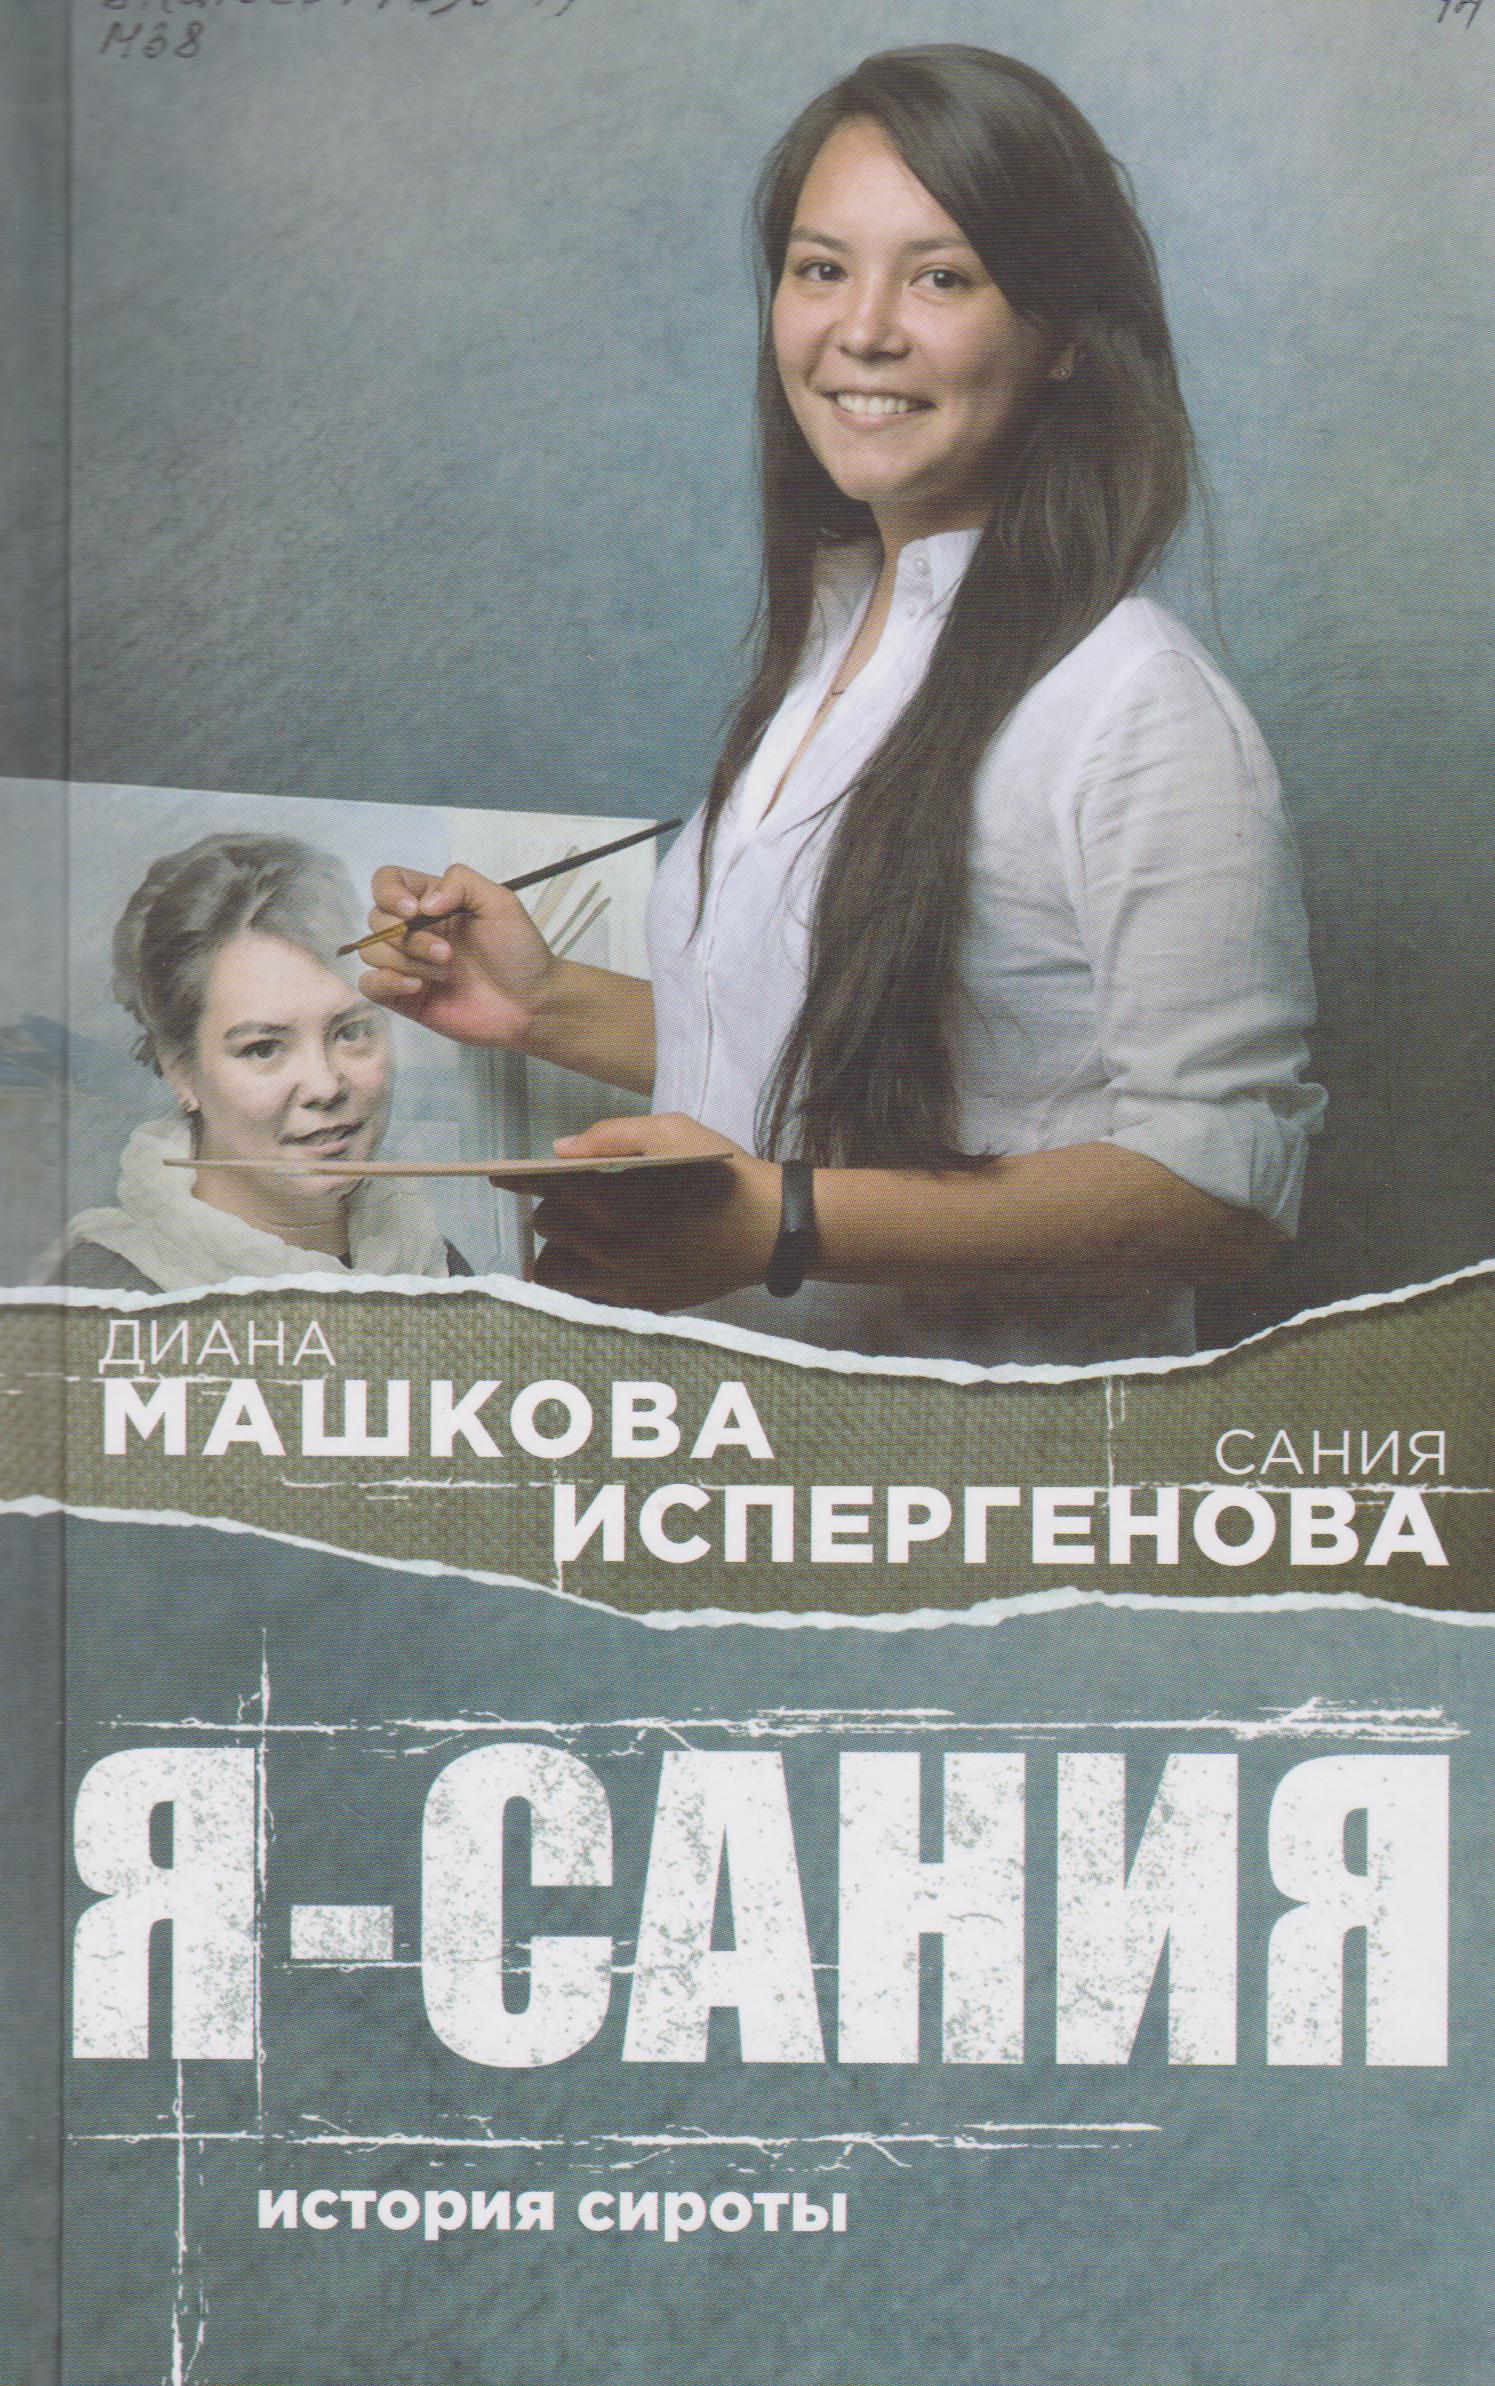 /Files/image/mashkova_1.jpg